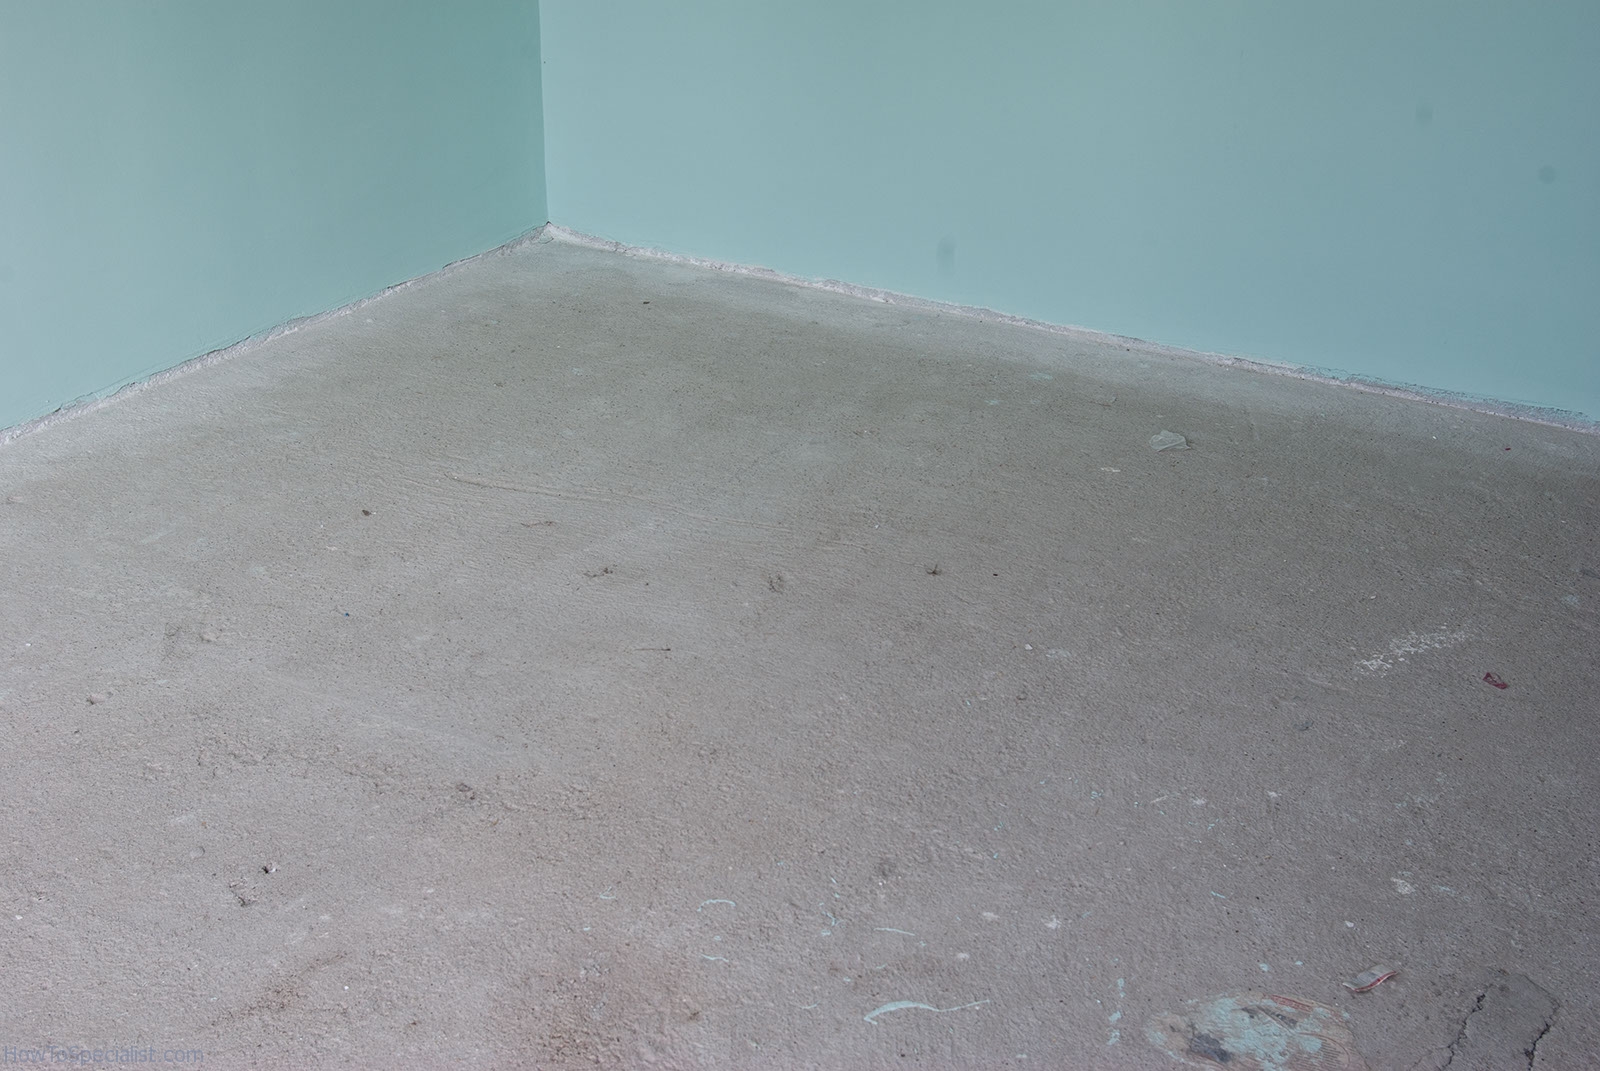 Room before installing laminate flooring